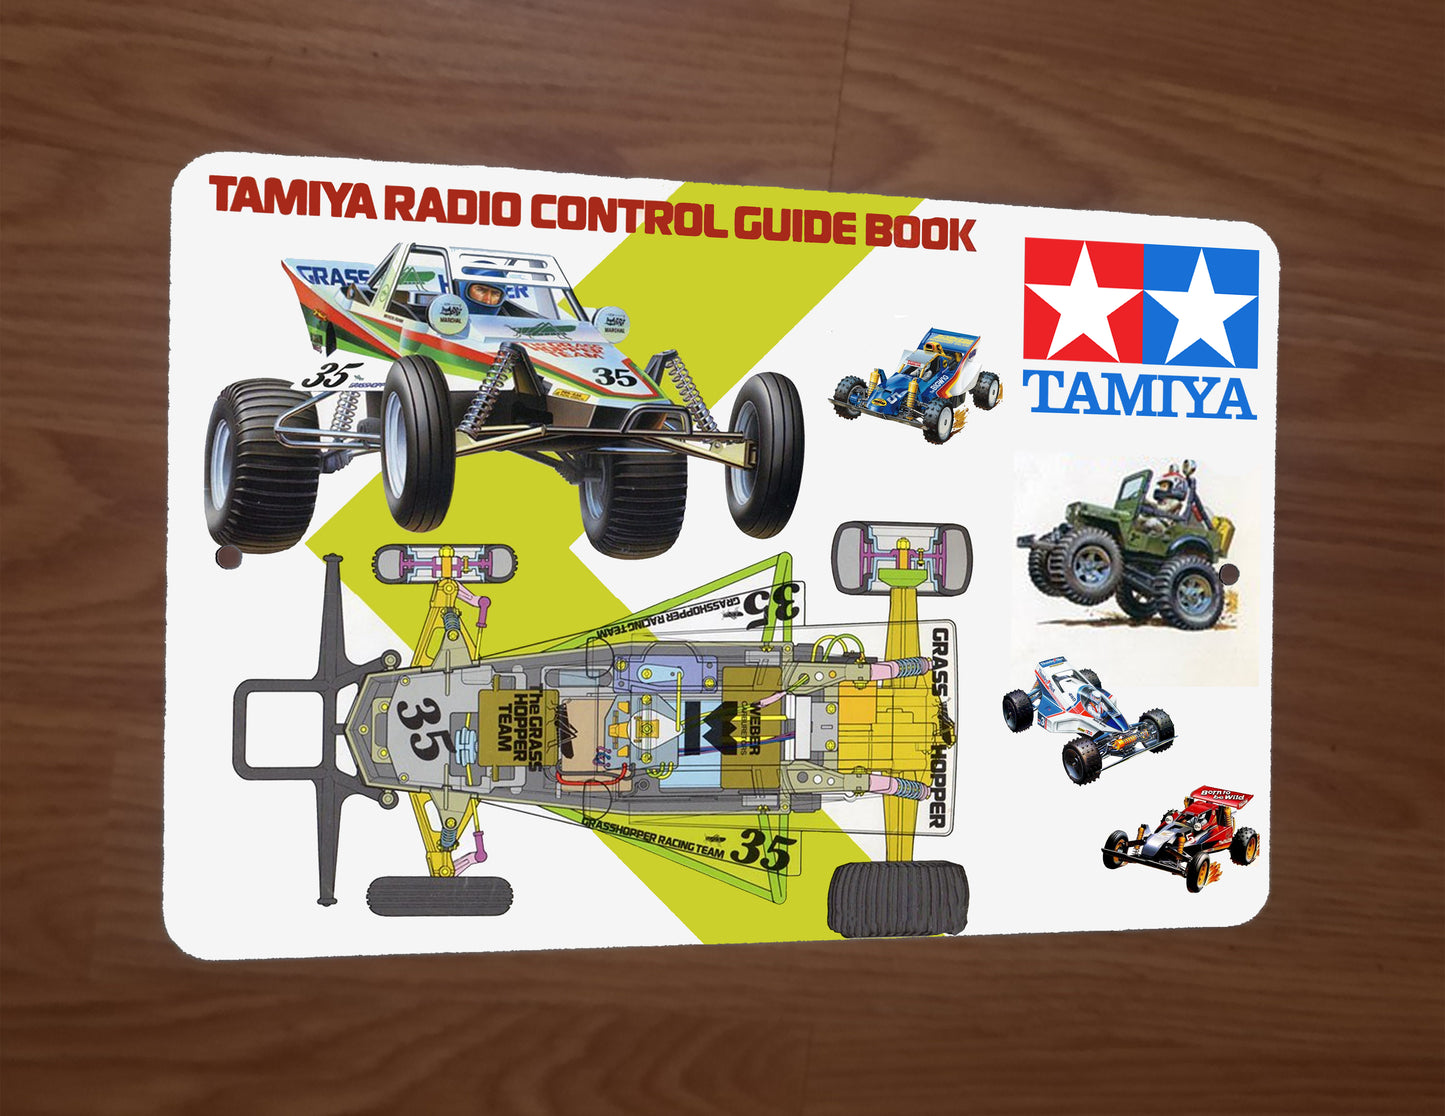 Tamiya RC Radio Control Guide Book Cover Art 8x12 Metal Wall RC Car Sign Garage Poster